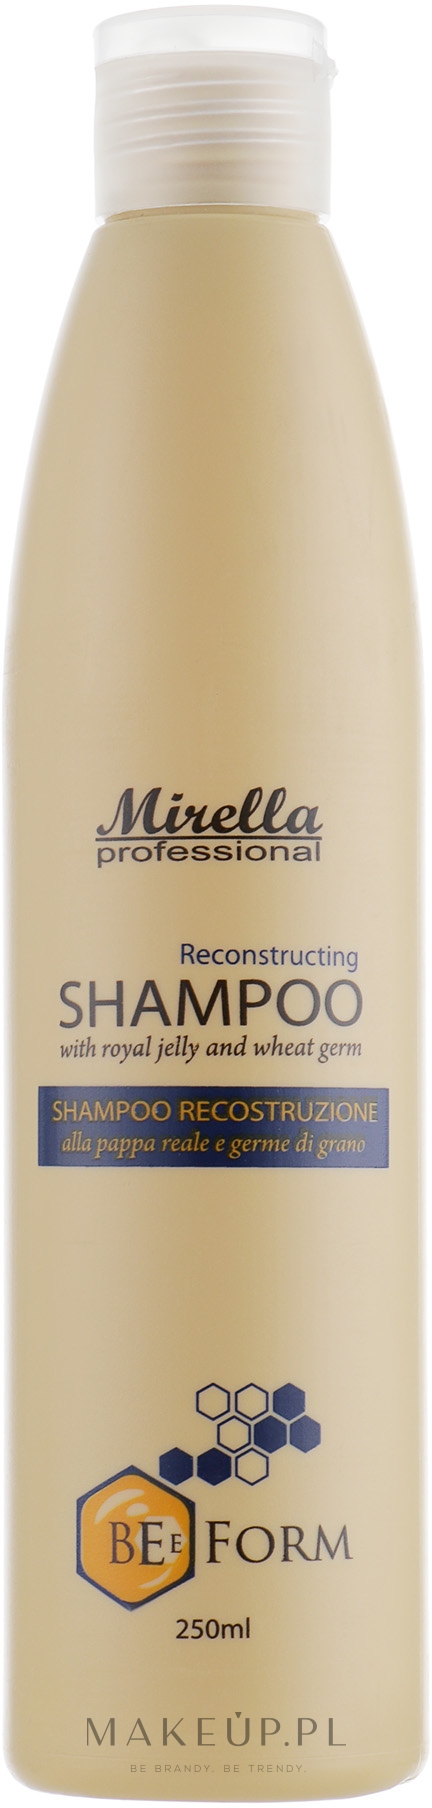 Mirella Professional Bee Form Reconstructing Shampoo Szampon